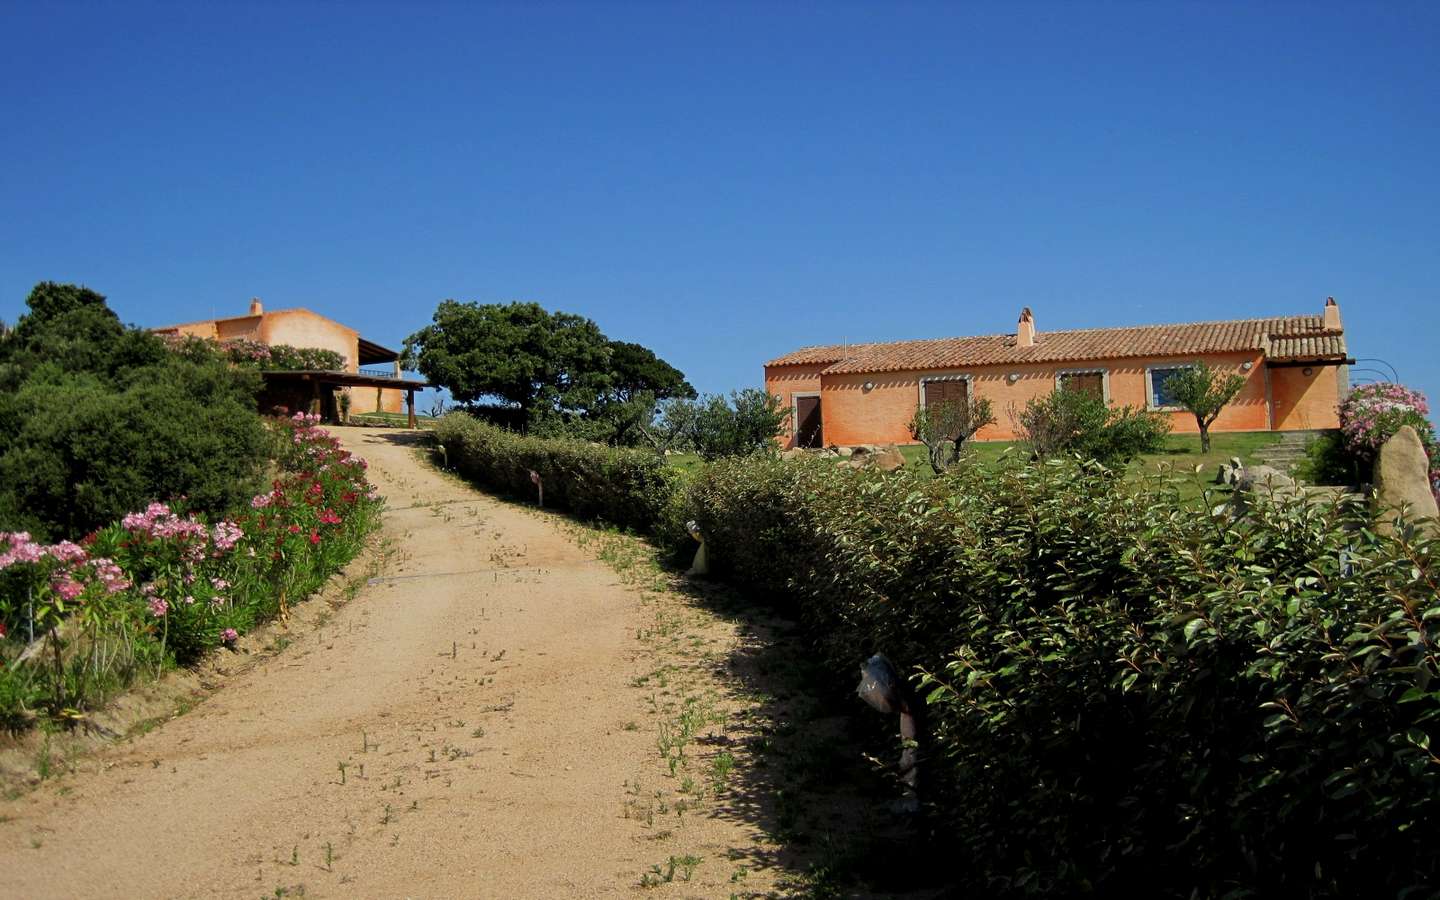 Top Properties in Sardinia, Houses, & Apartments For Sale - Sardinia, Italy